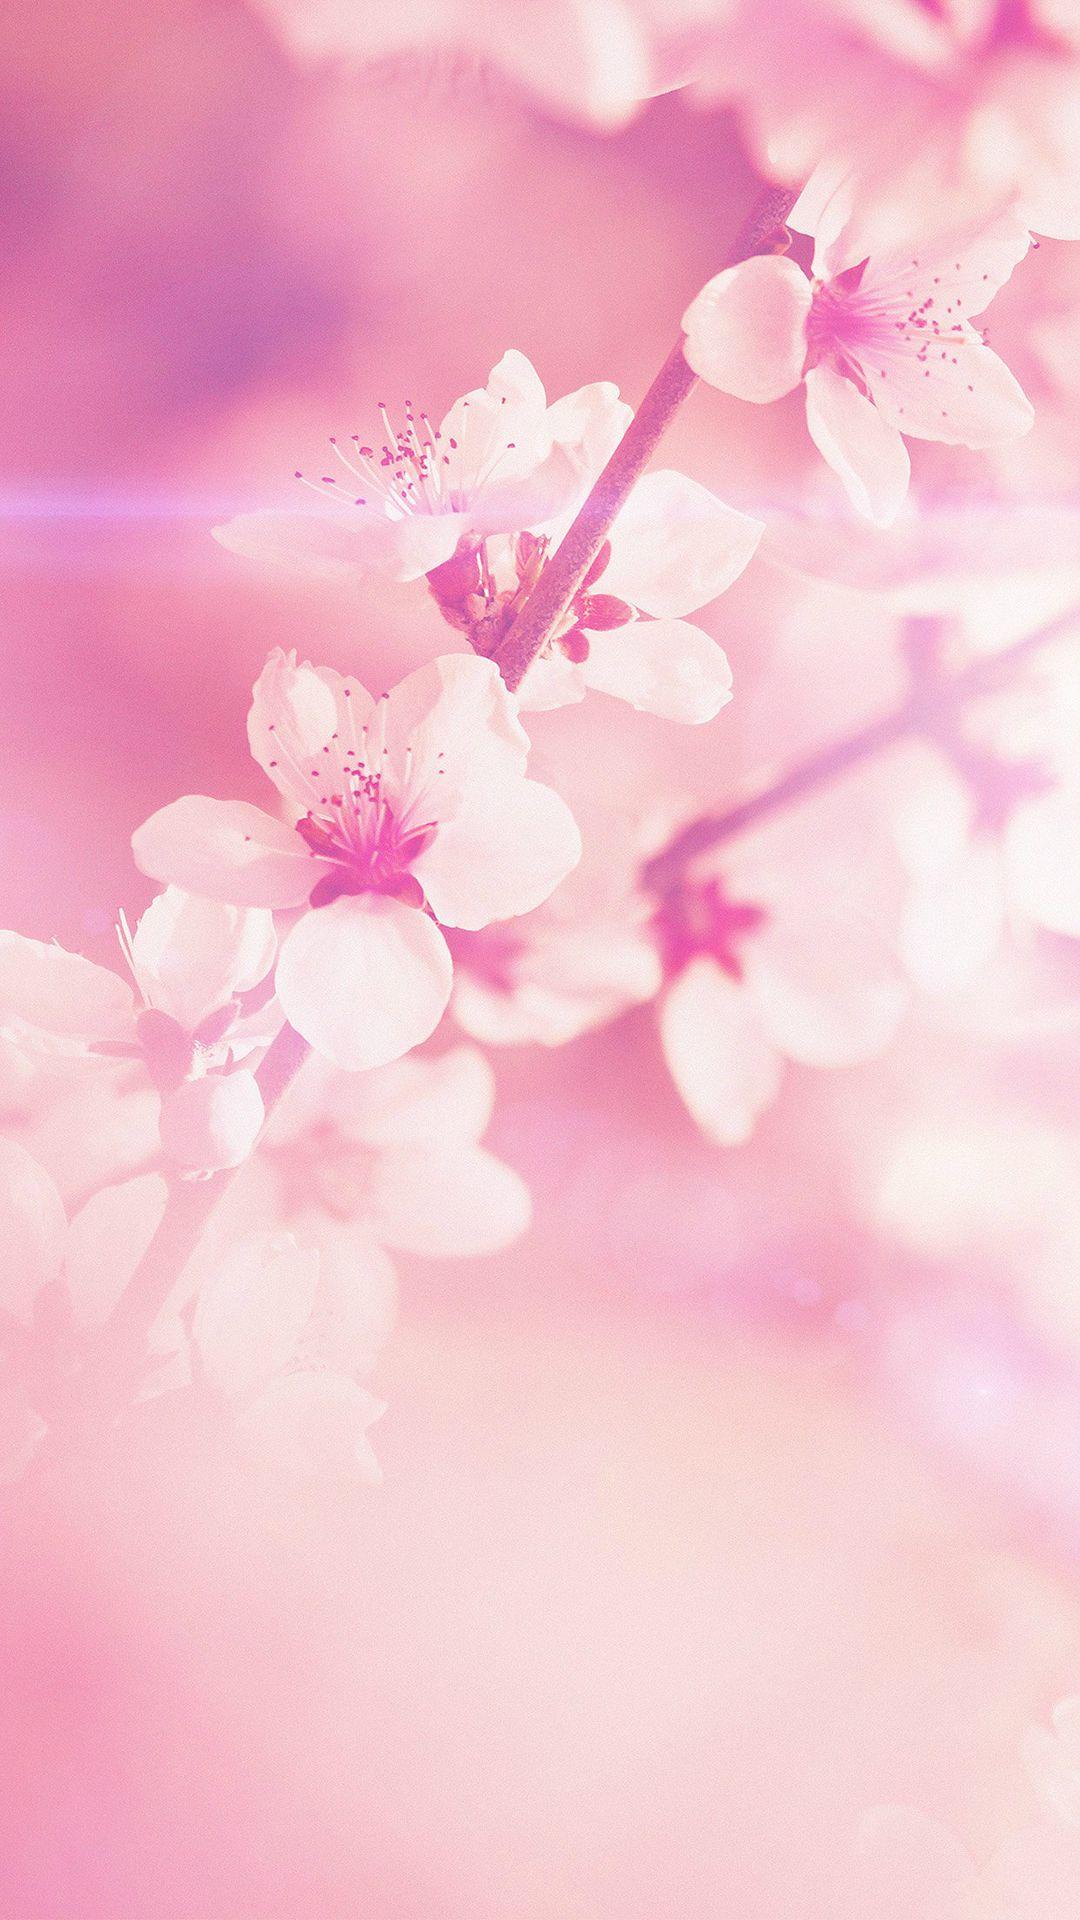 Light Pink Floral iPhone Wallpaper Free Light Pink Floral